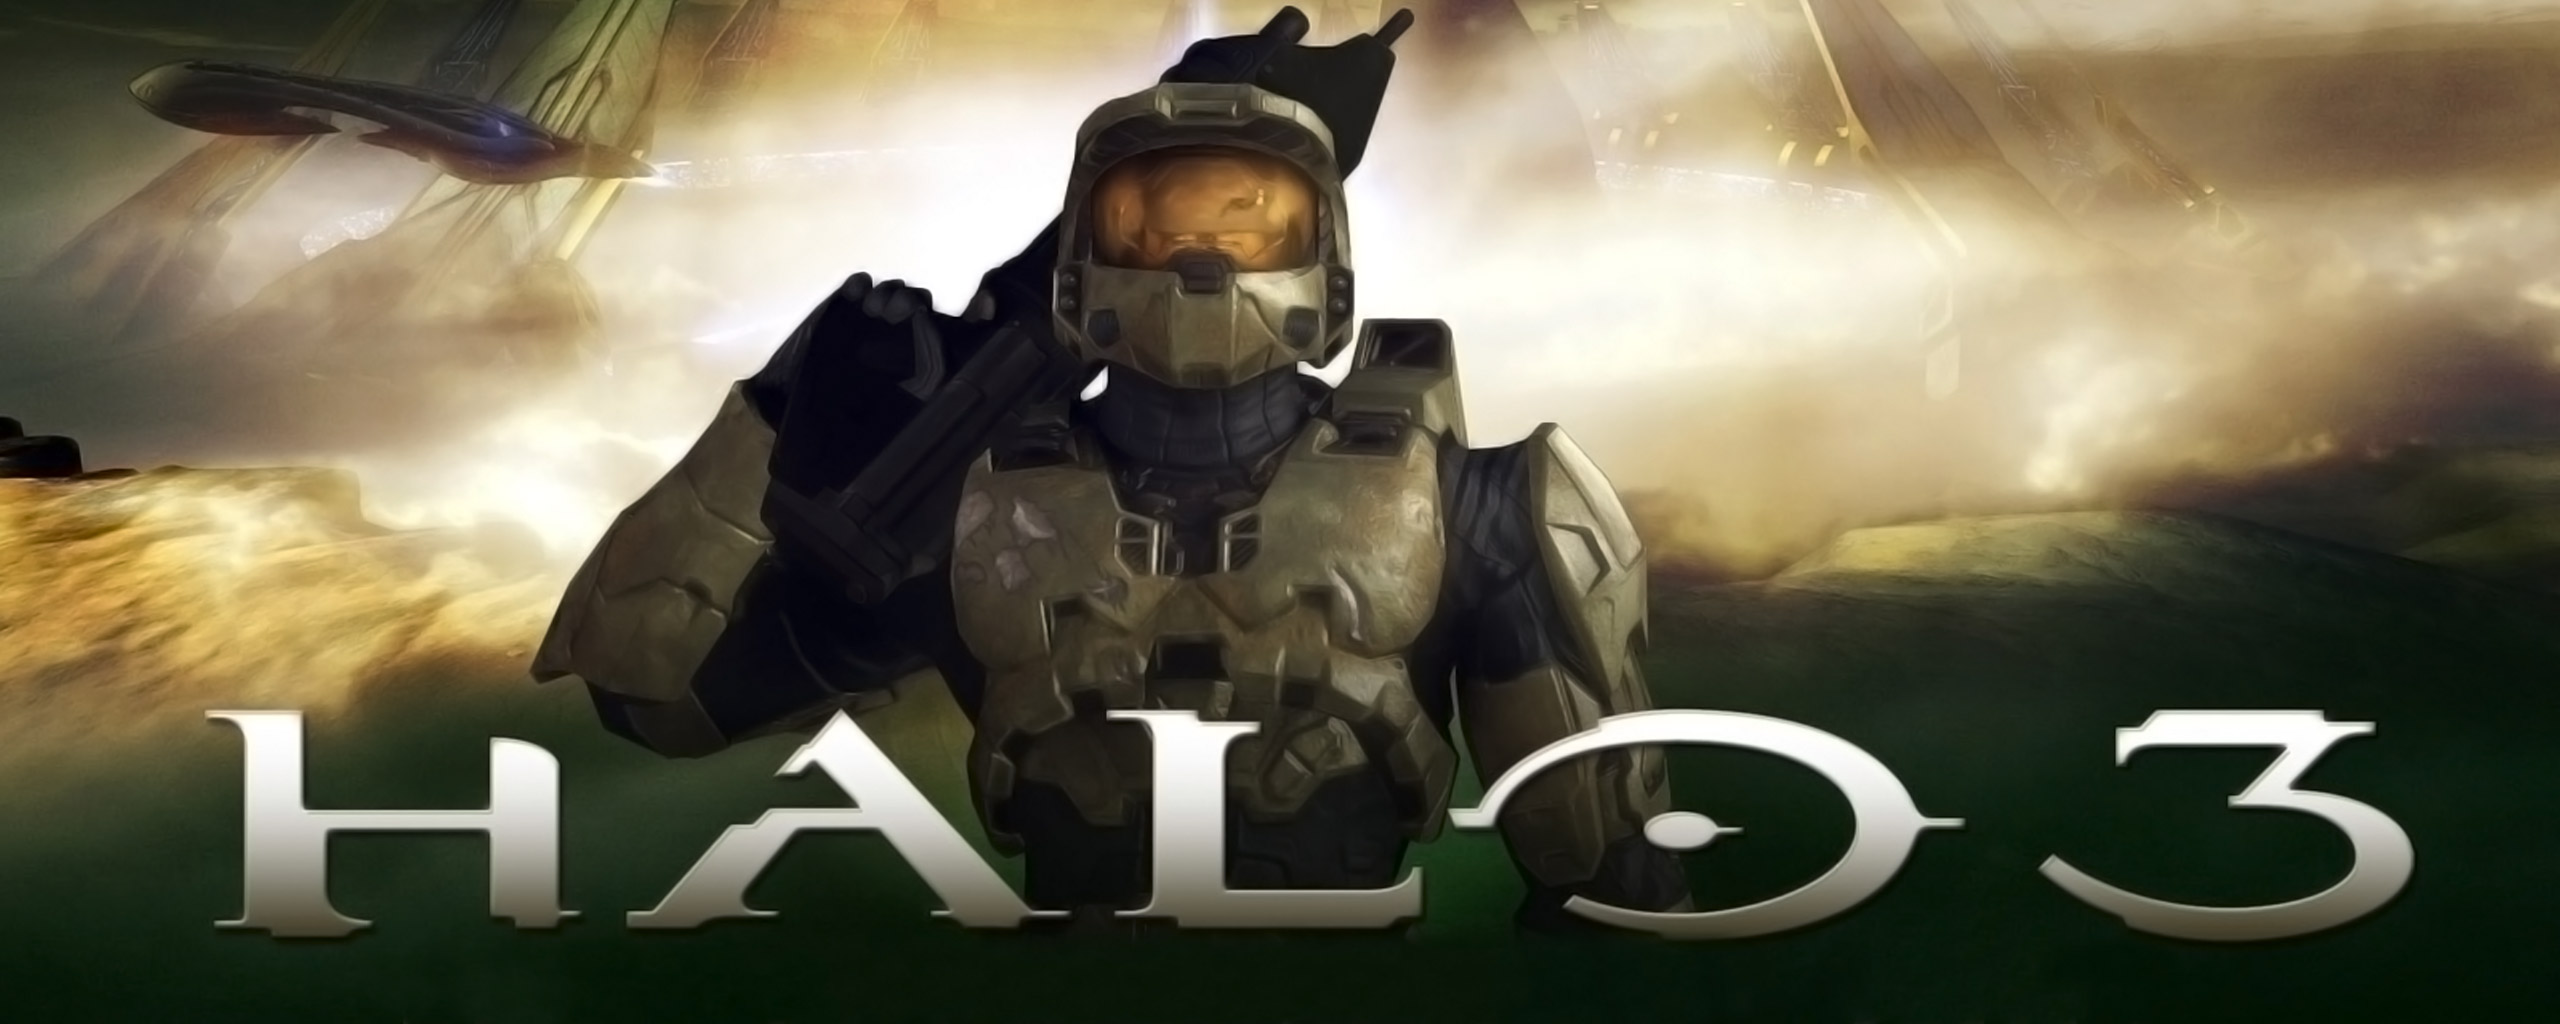 Halo 3 pc free